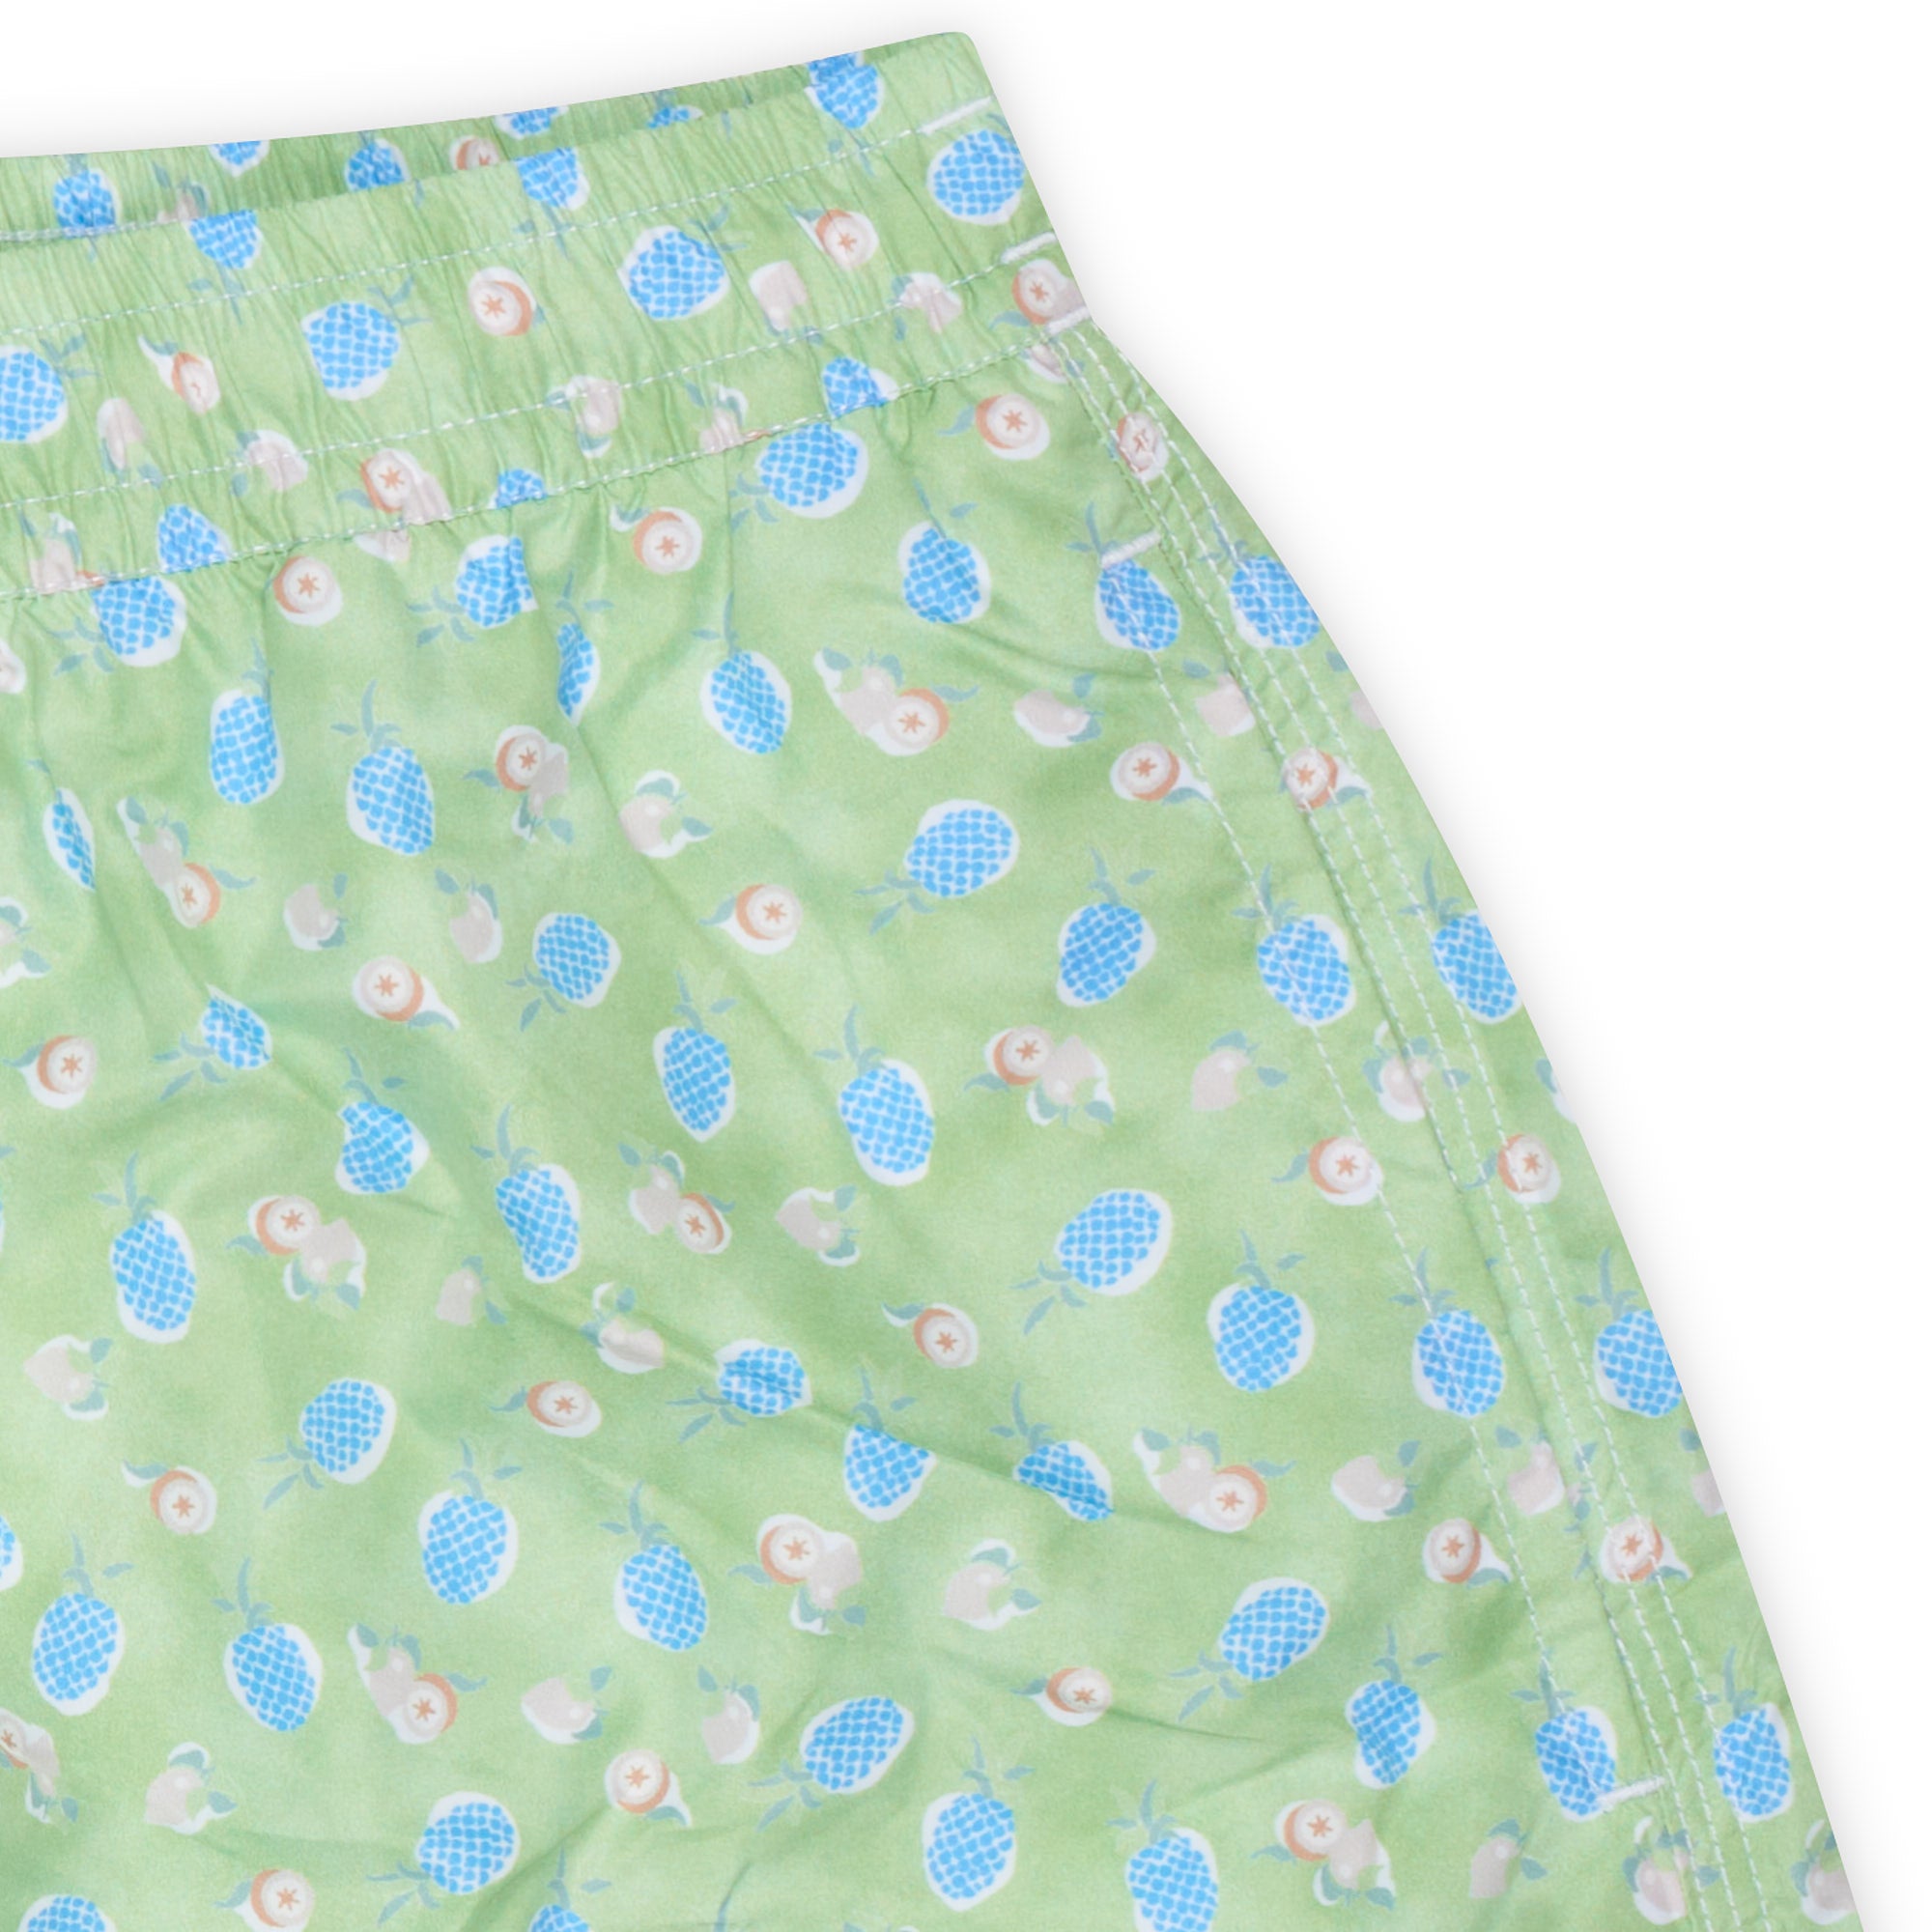 FEDELI Green Fruit Print Madeira Airstop Swim Shorts Trunks NEW Size 3XL FEDELI